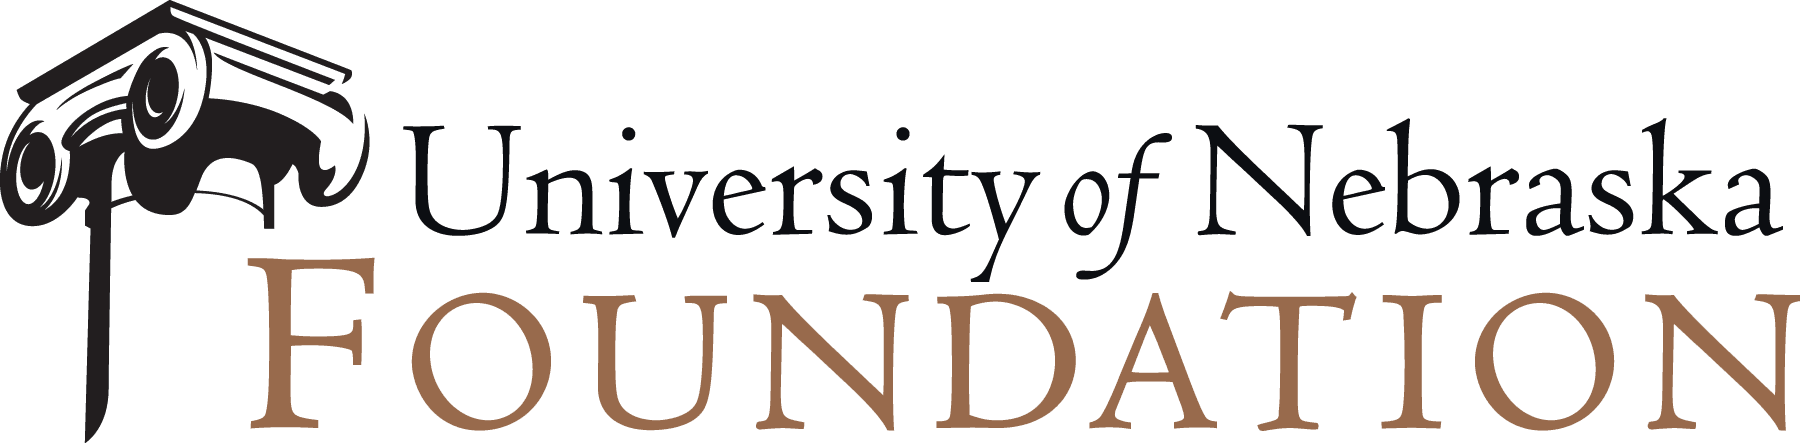 University of Nebraska Foundation - Director of Gift Planning